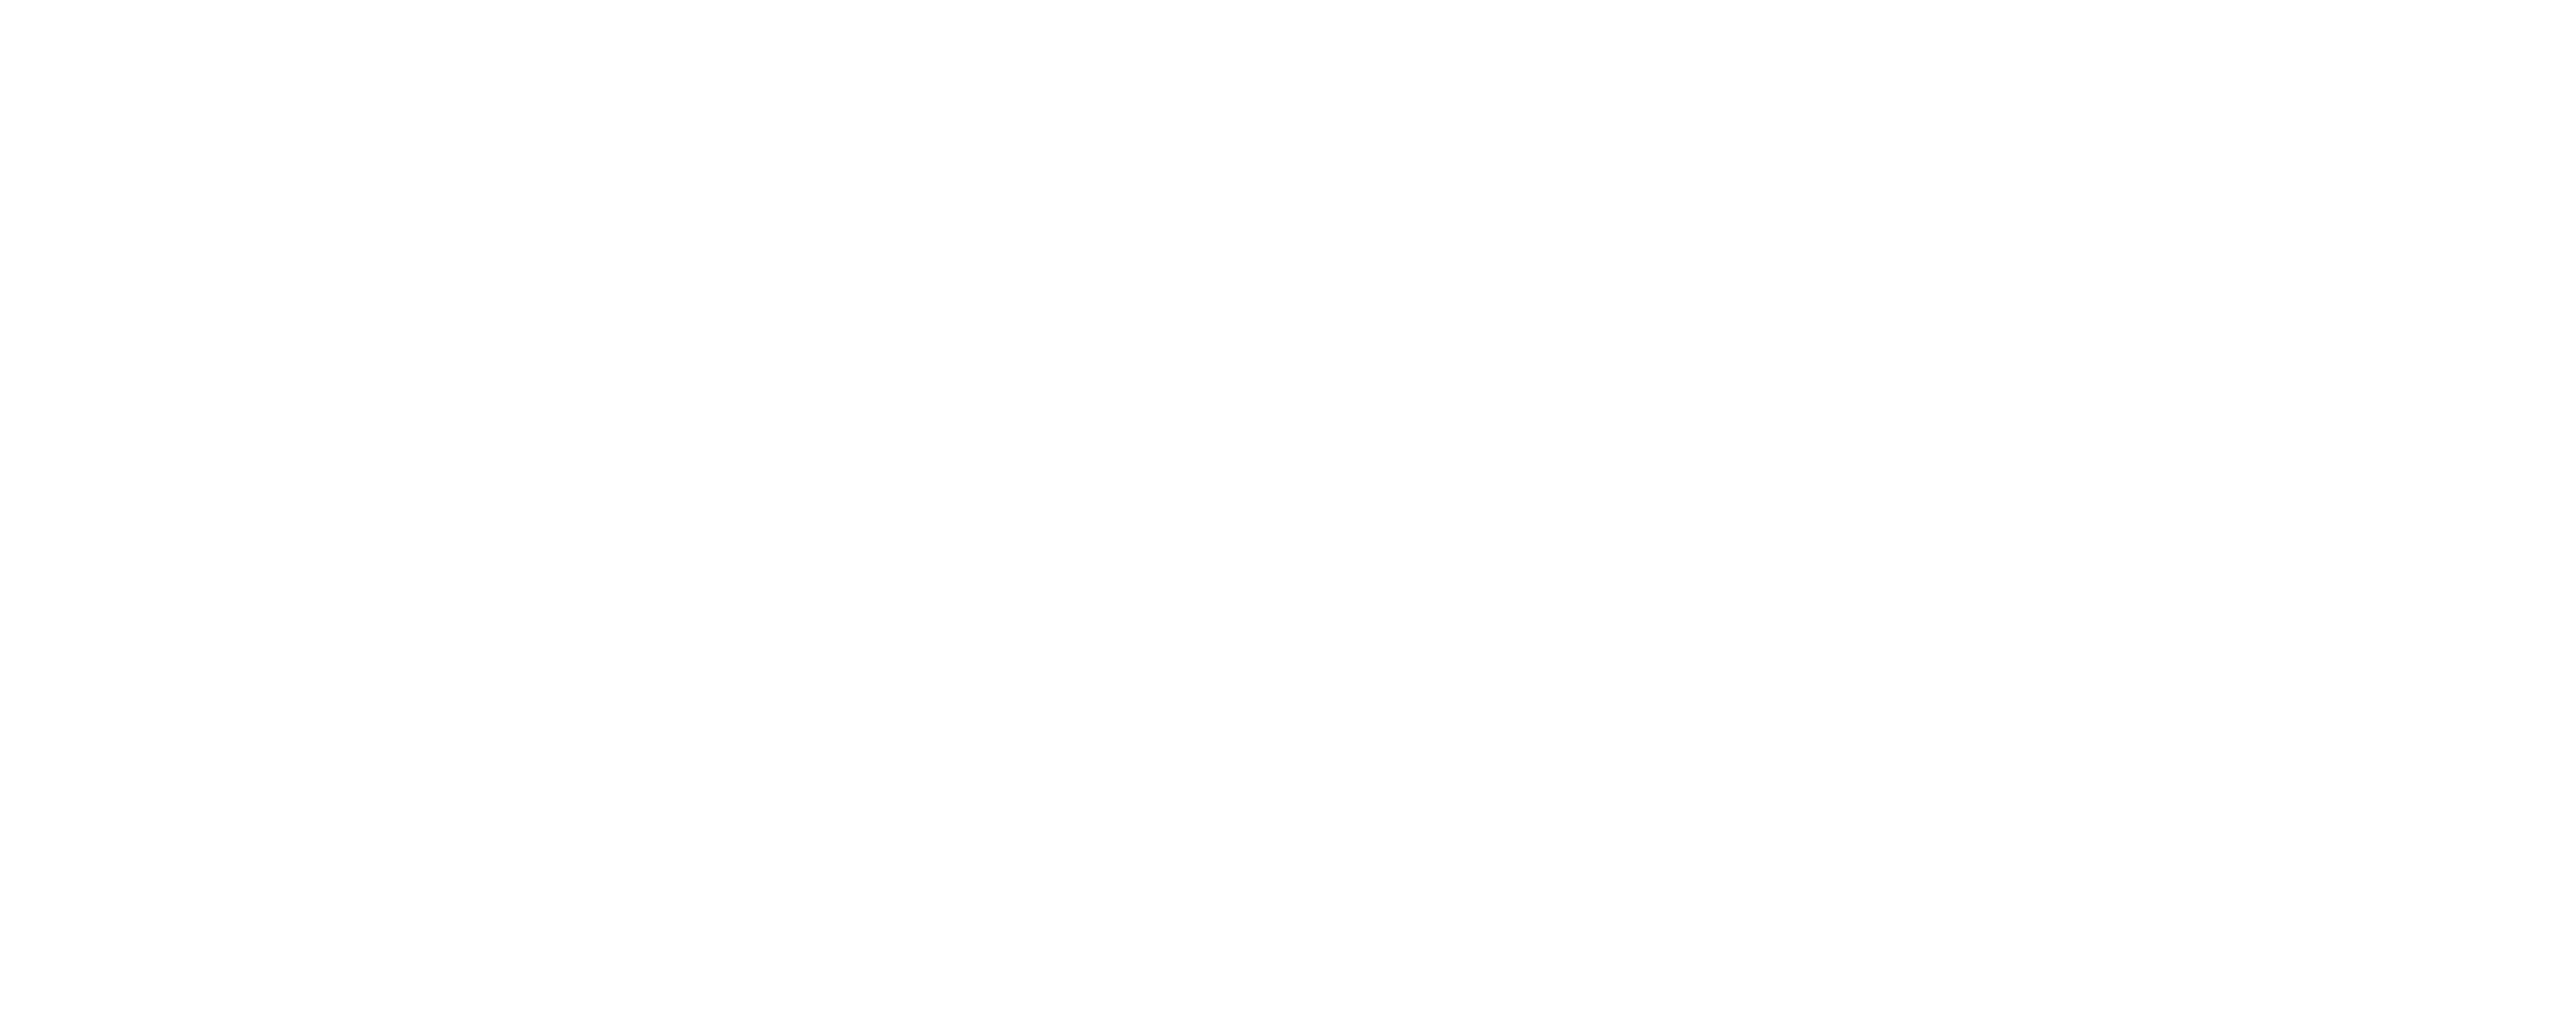 Climate Finance Pakistan